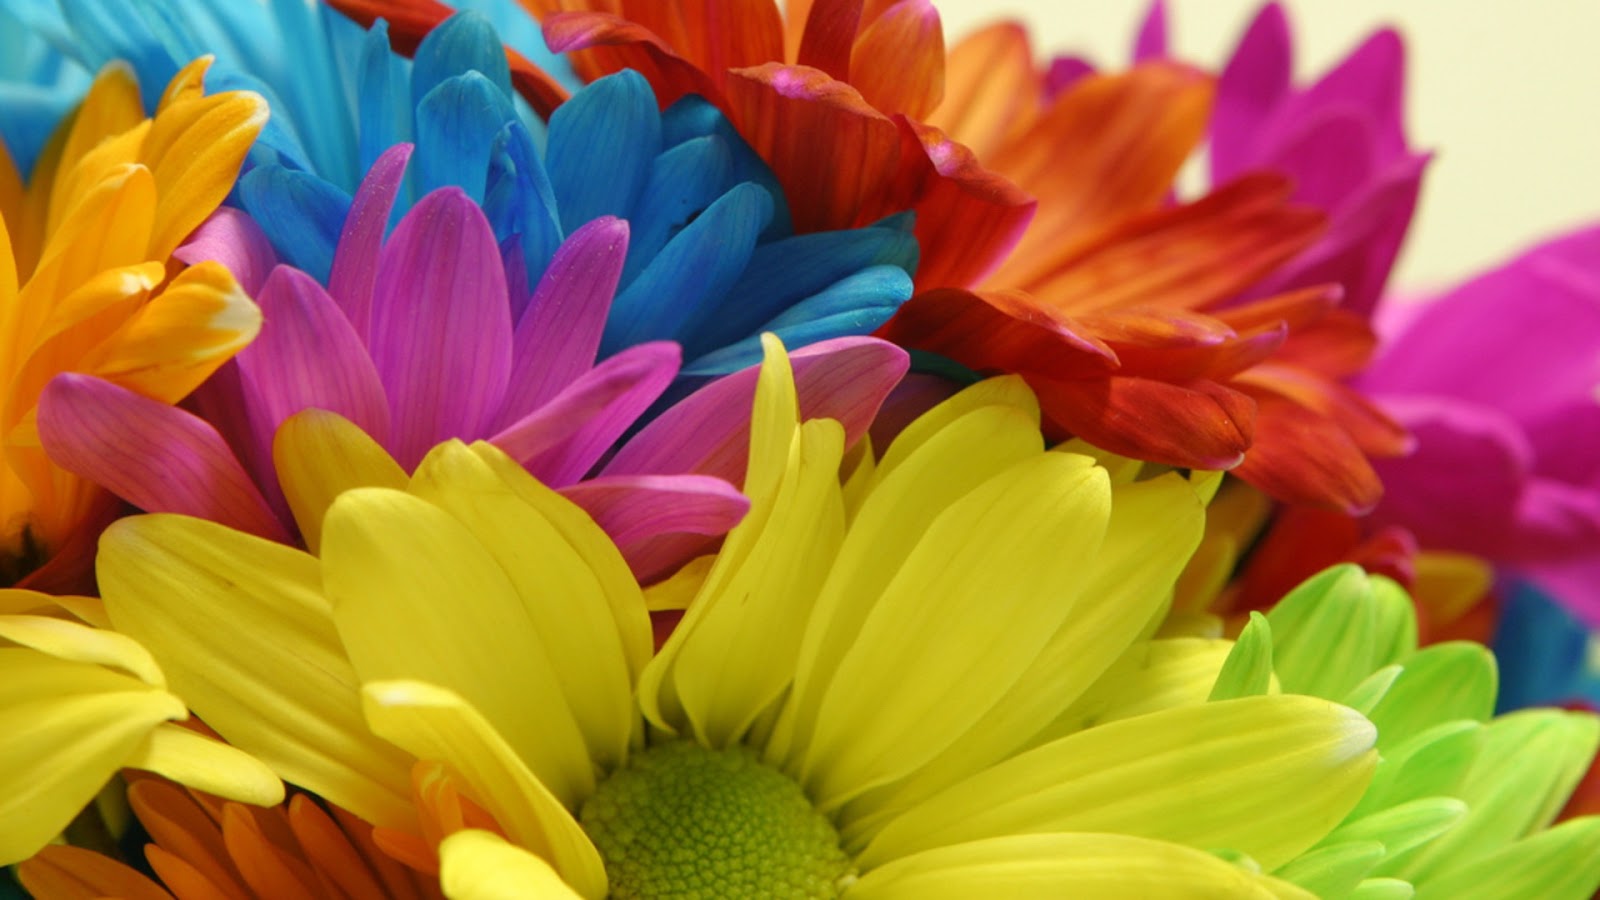 colorful flowers wallpaper - HD Desktop Wallpapers | 4k HD